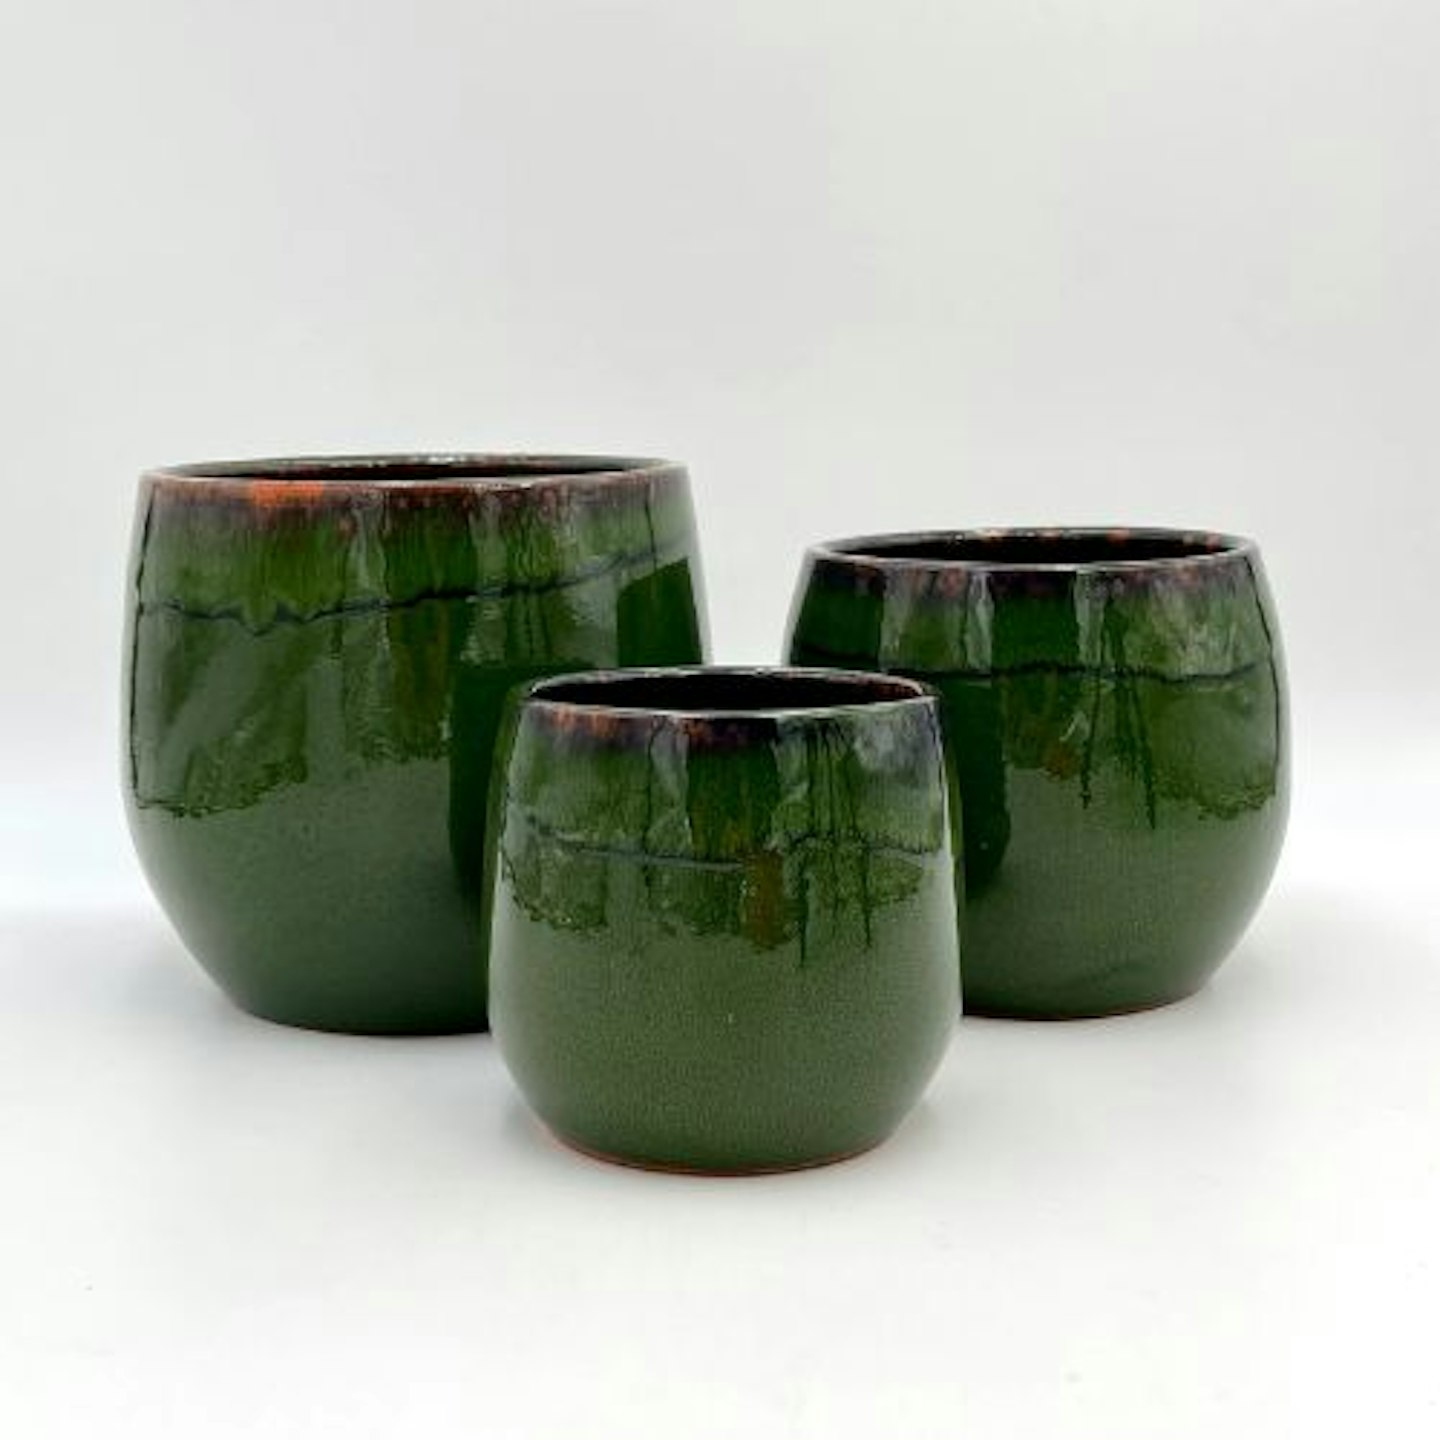 Charlotte Emerald Green, Glossy Glazed Well Made Ceramic Plant Po